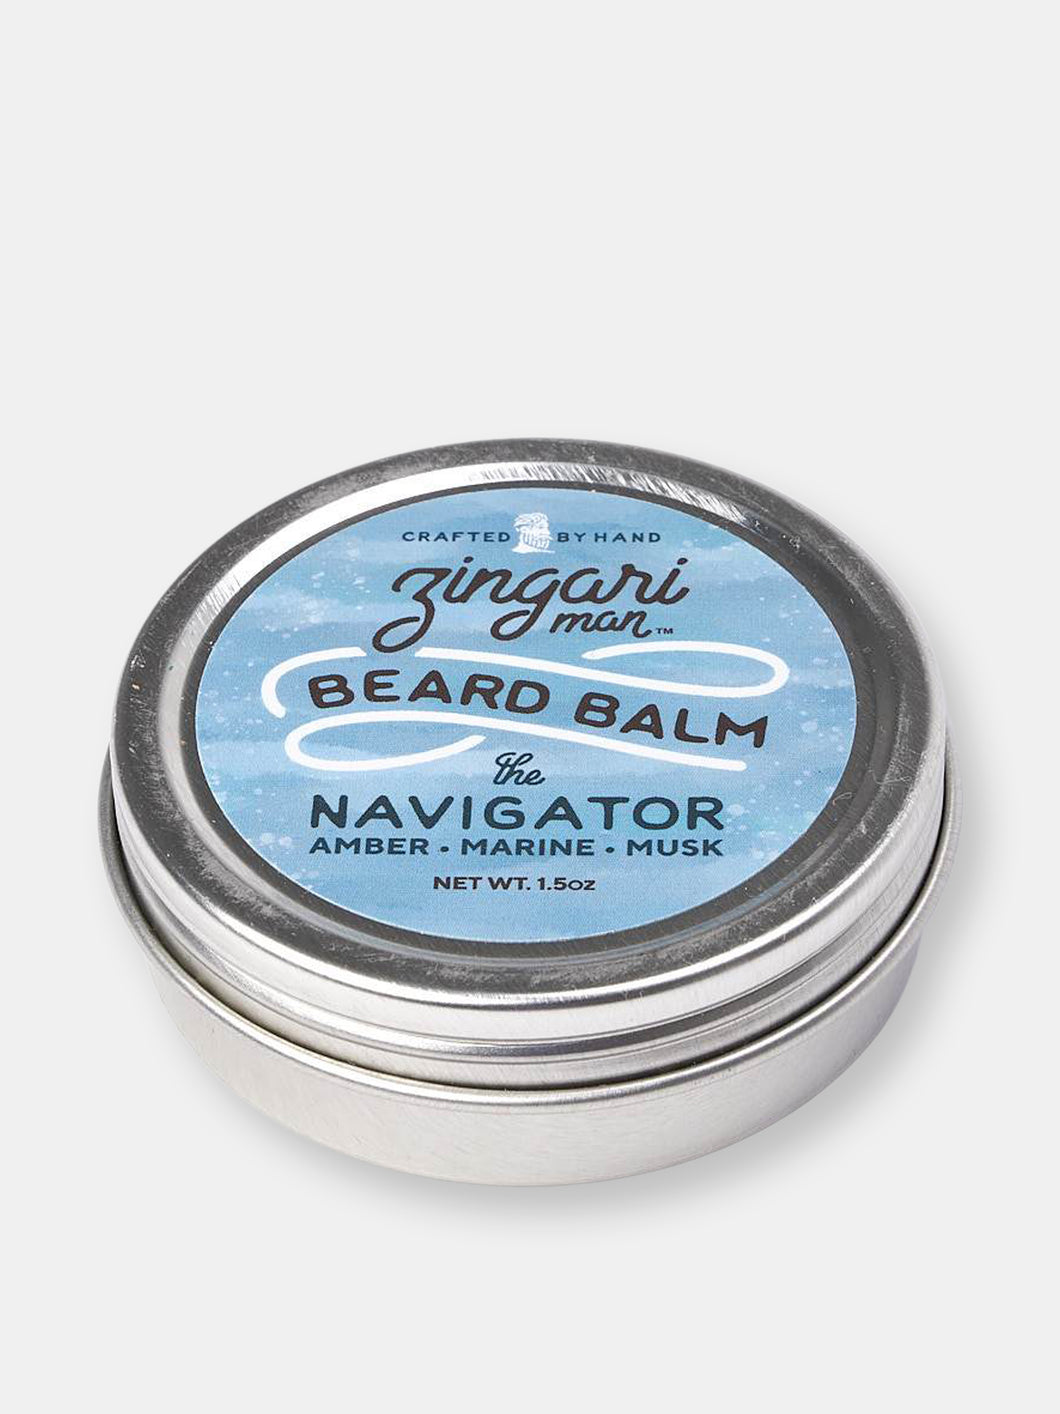 The Navigator Beard Balm